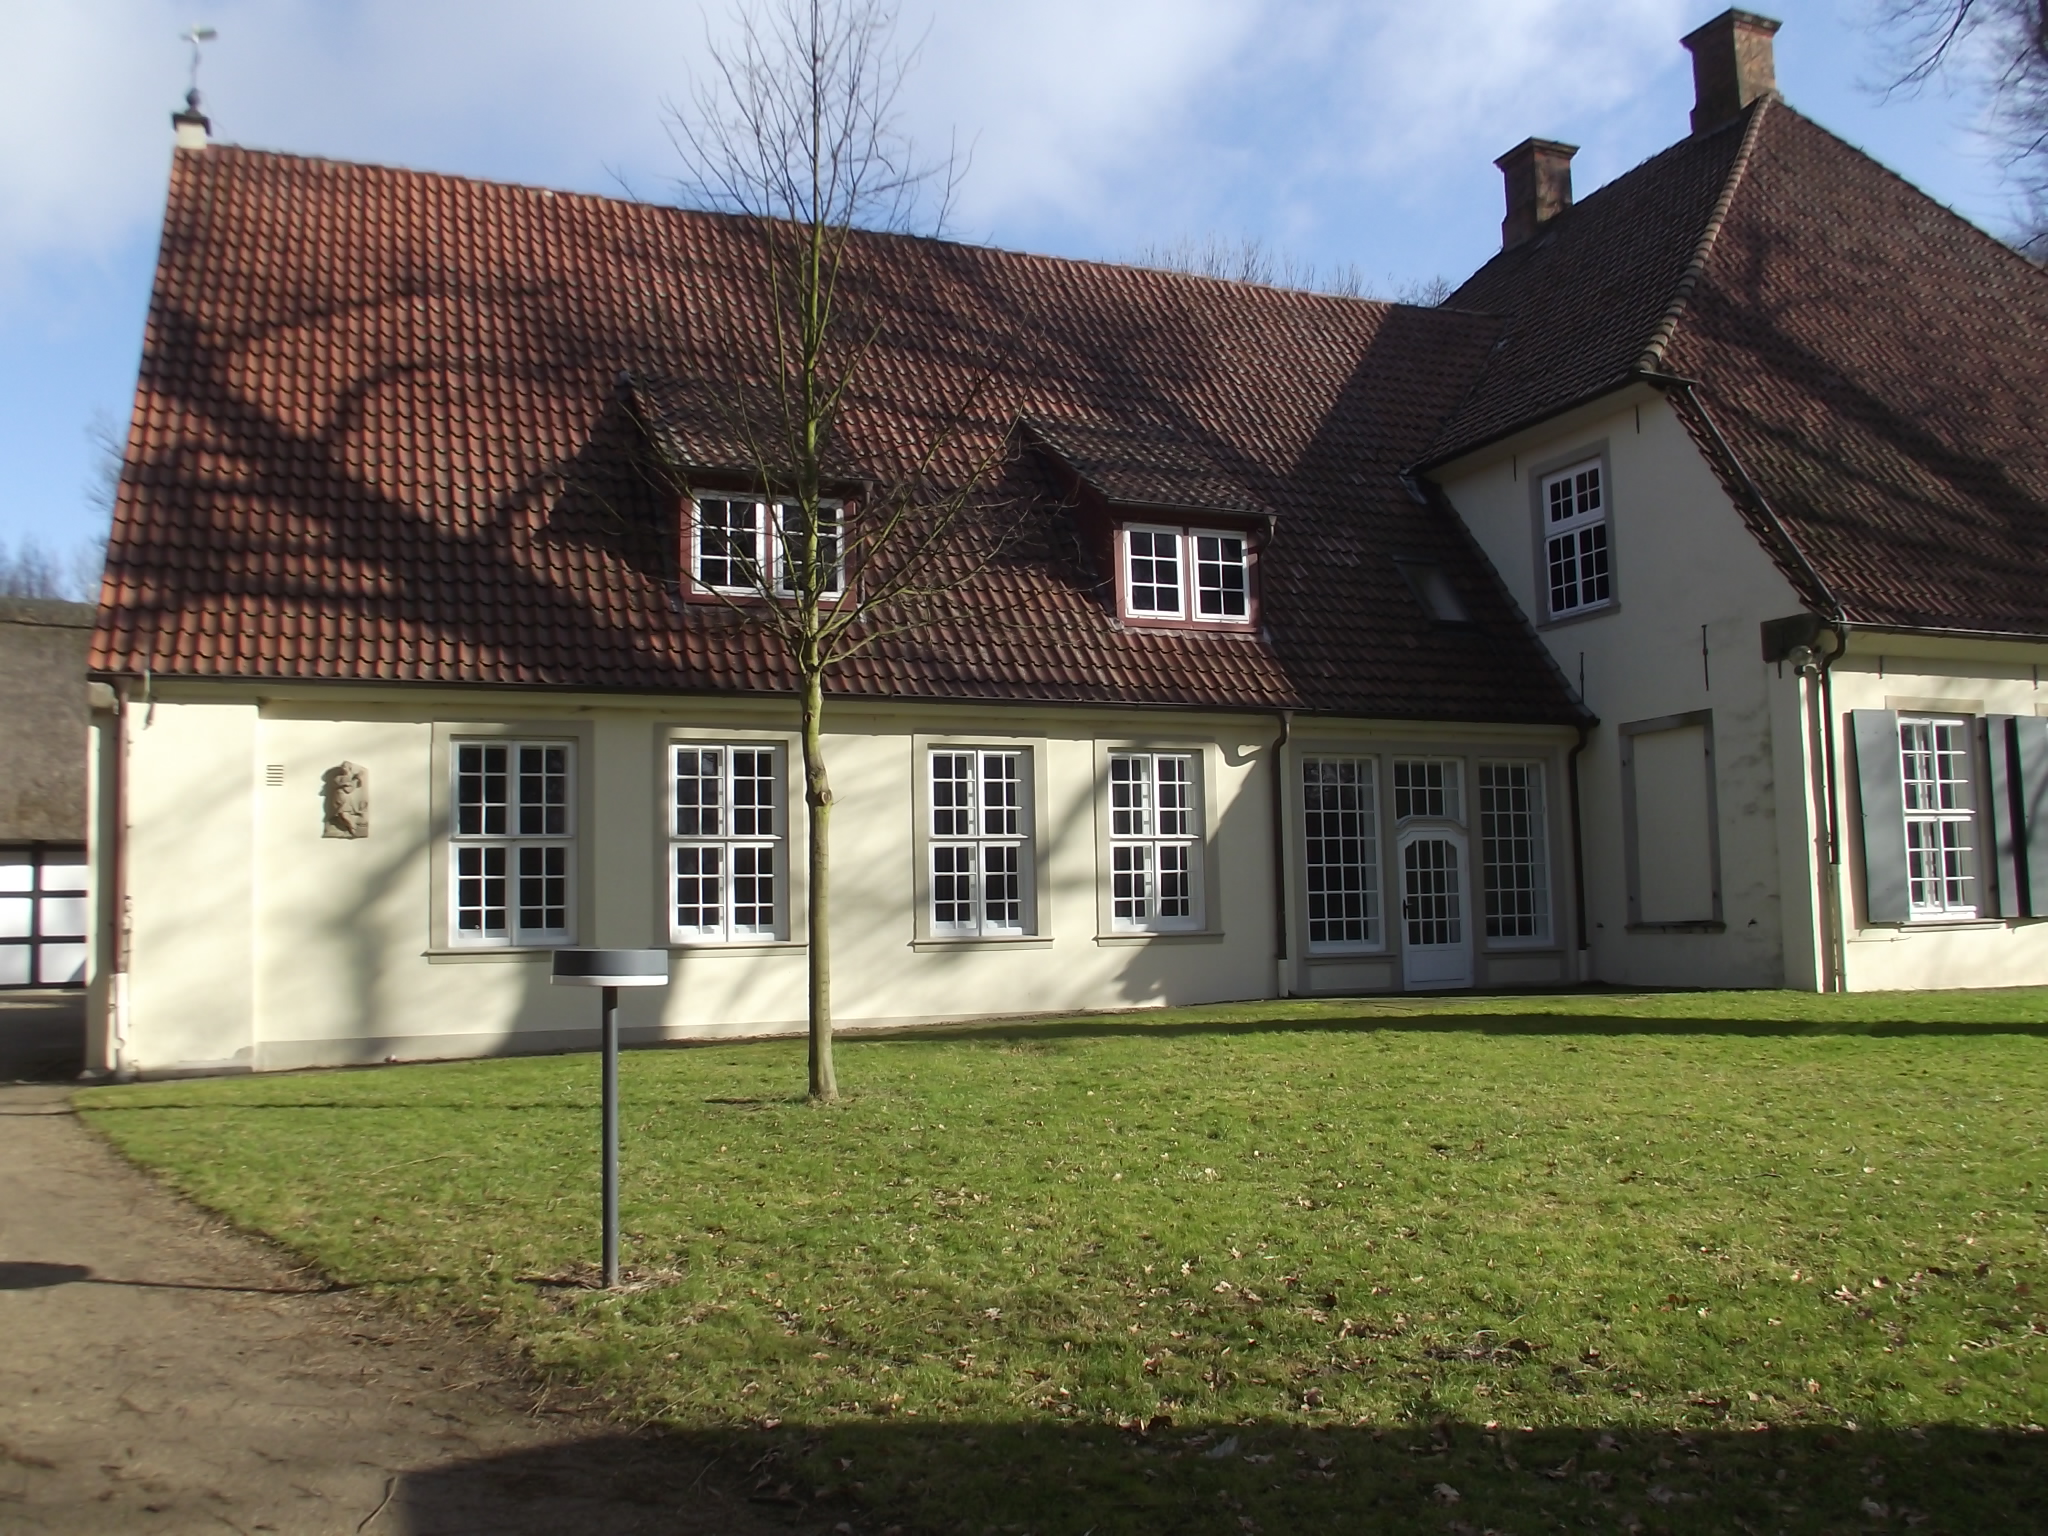 Haus Riensberg vom Focke Museum in Bremen